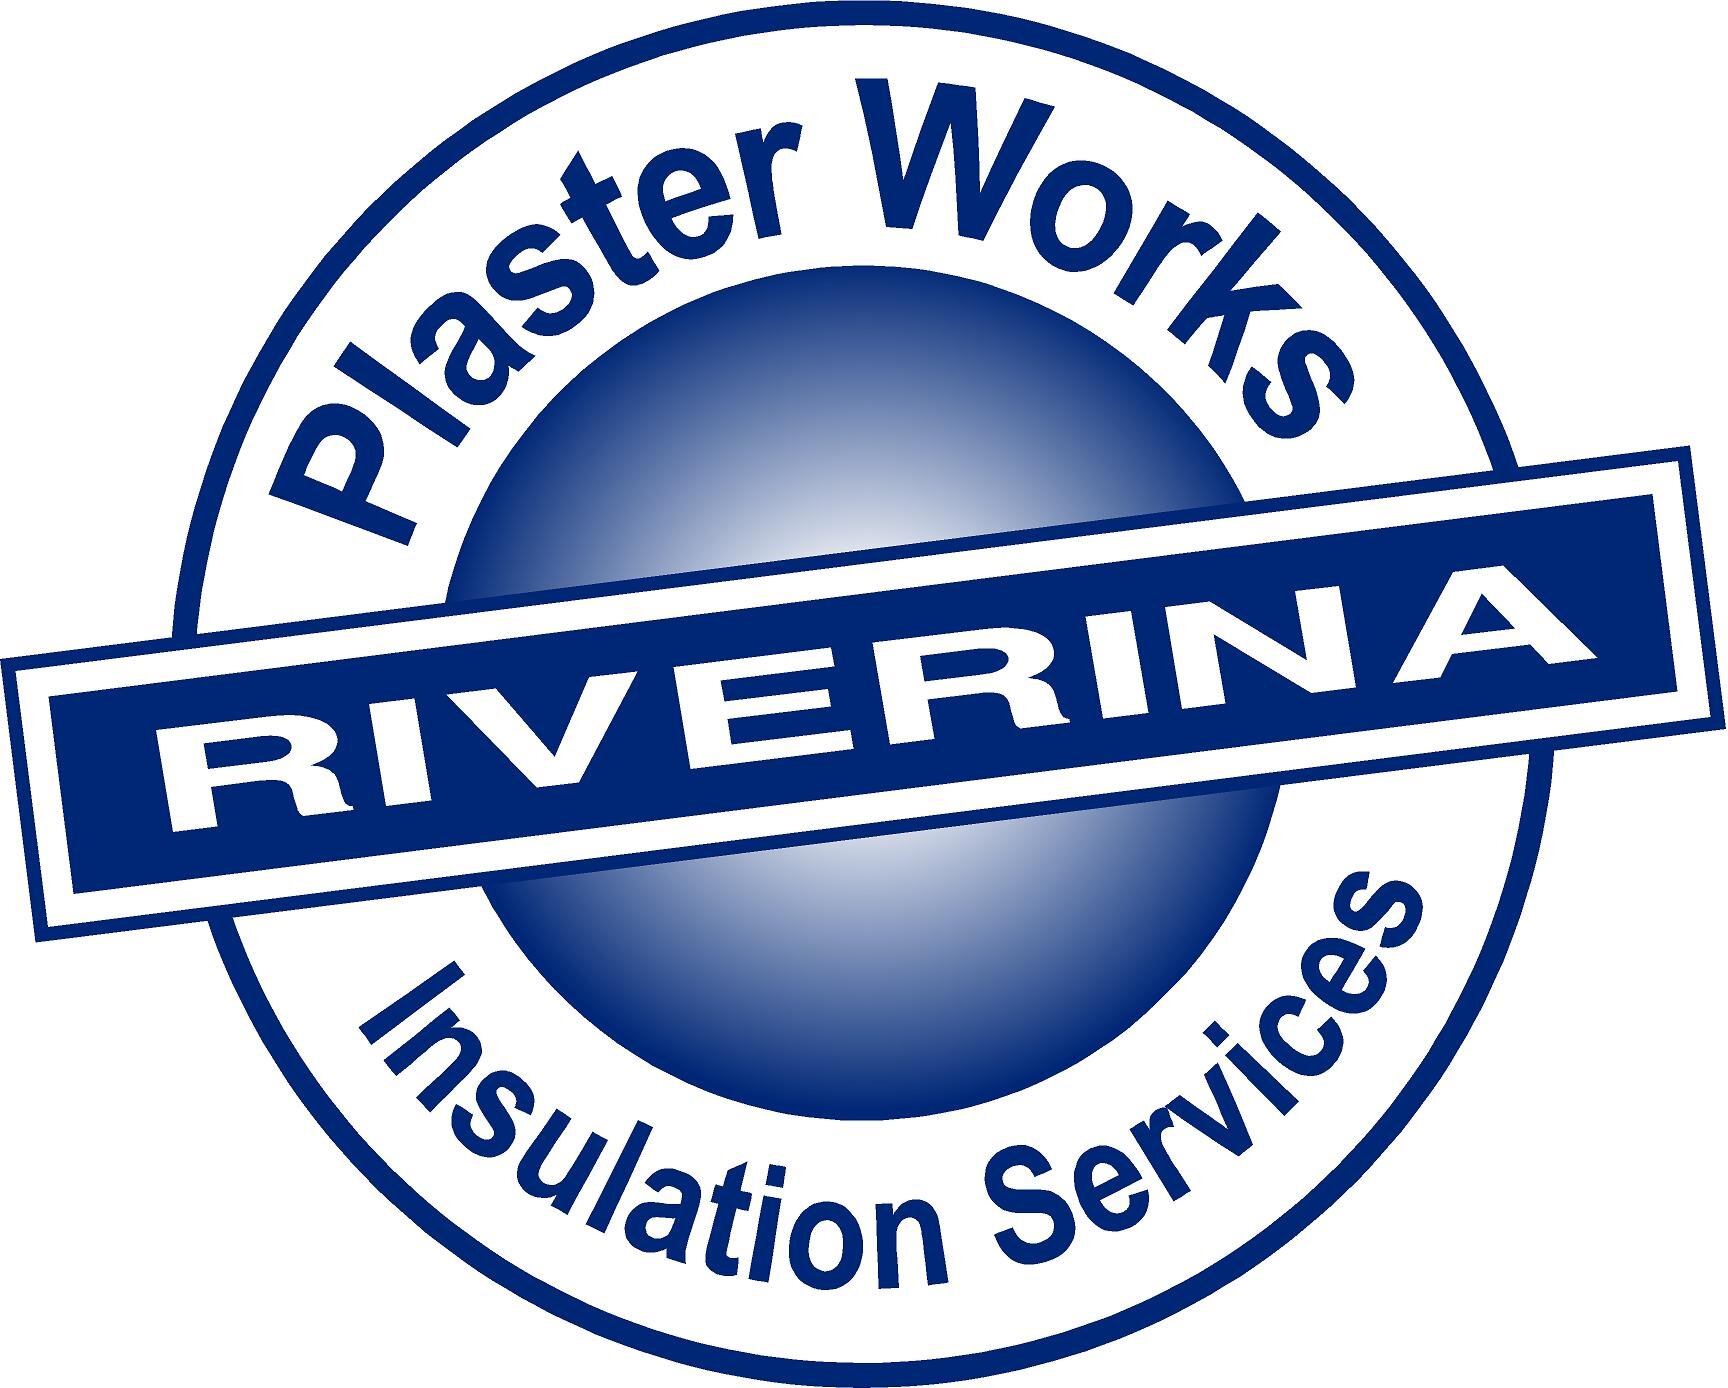 Riverina Plaster Works &amp; Insulation Services